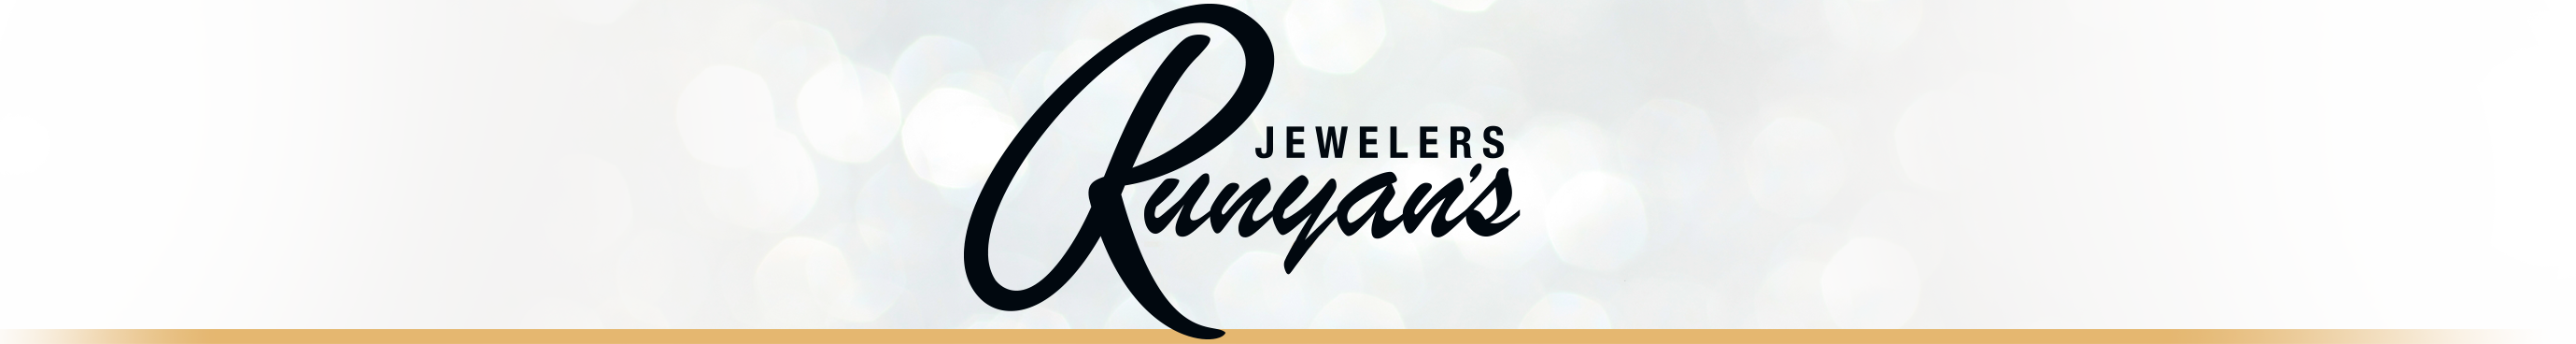 Runyan's Jewelers Logo